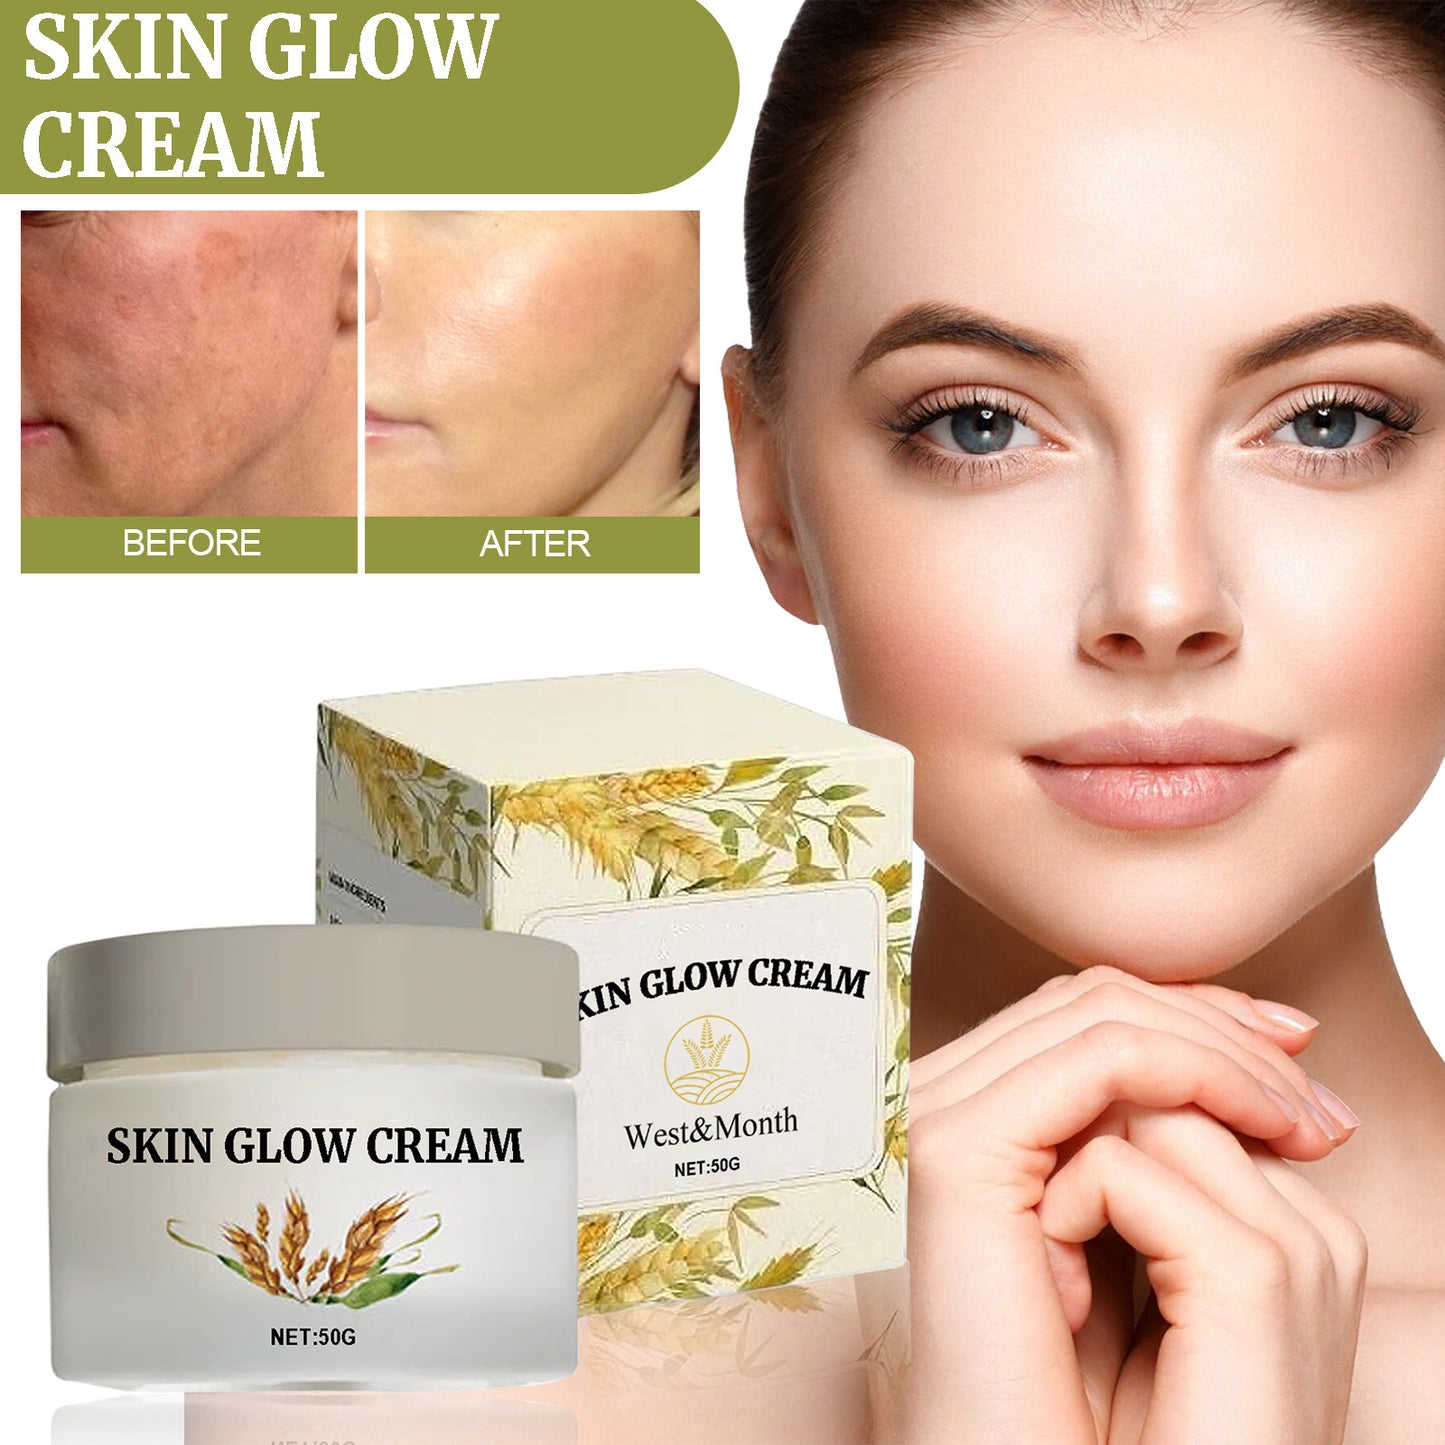 Skin Lightening Cream